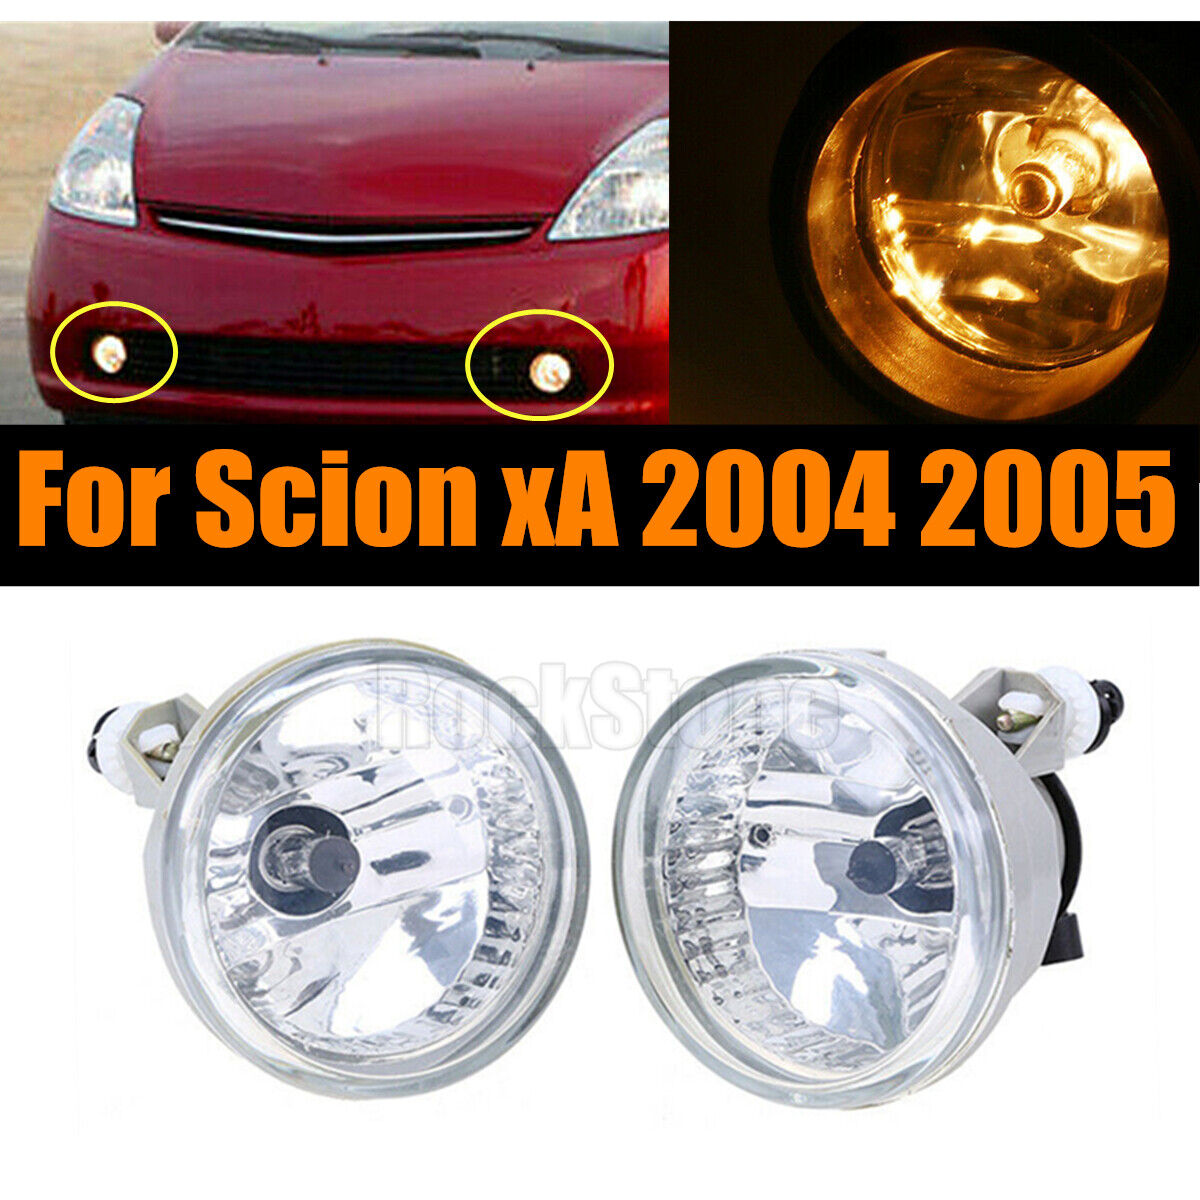 Pair of Bumper Fog Light Driving Lamps for Scion xA 2004-2005 Left + Right Side